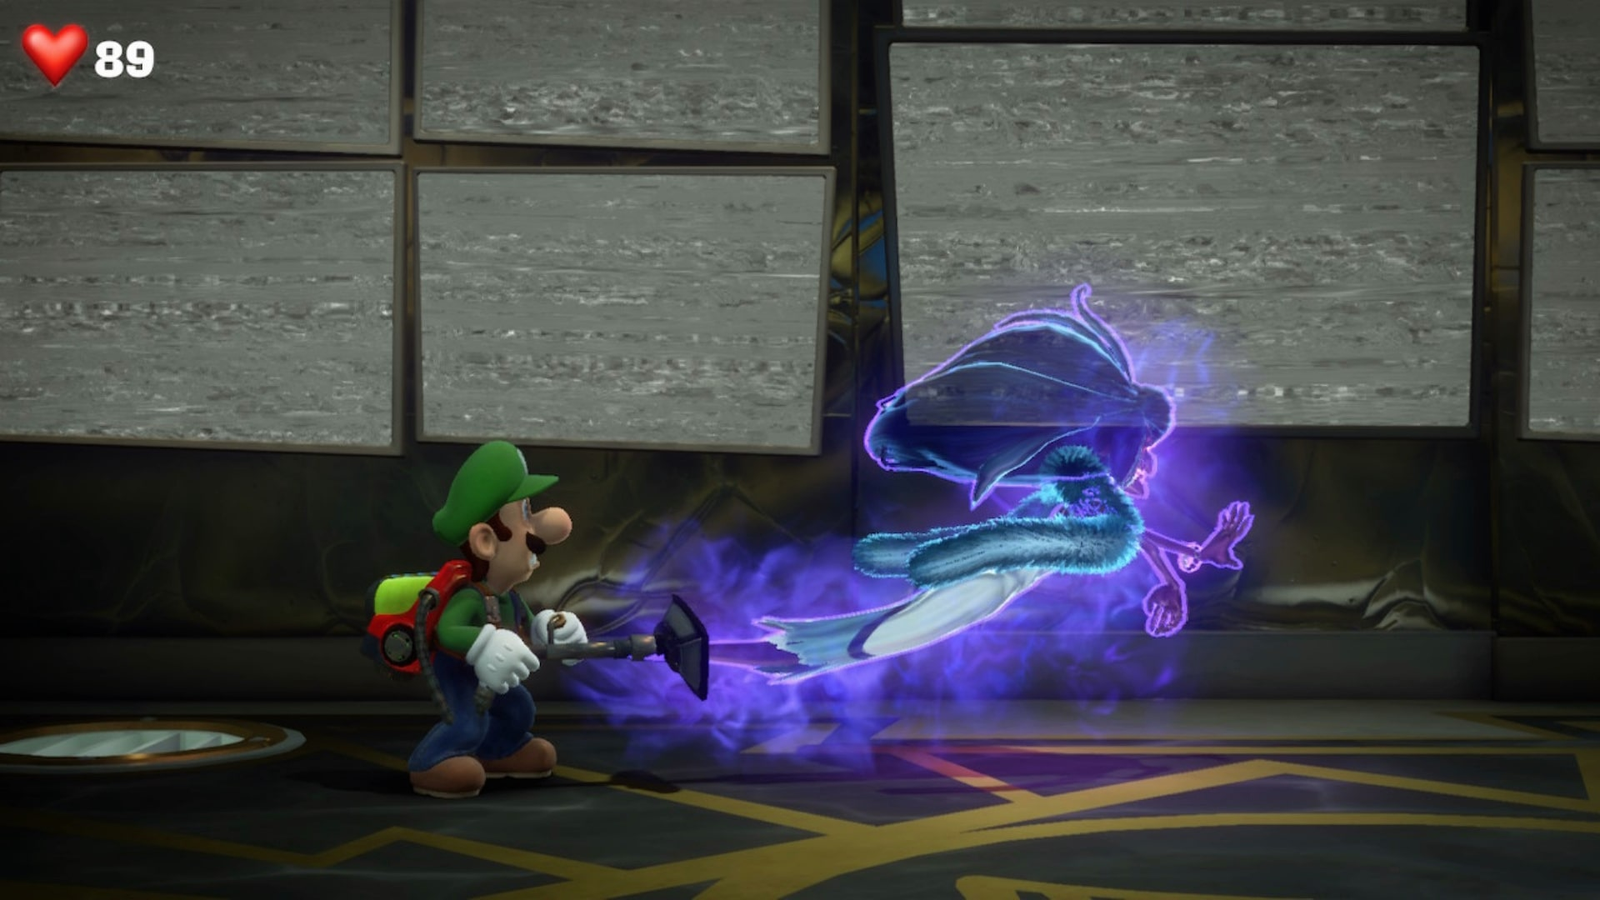 How long to beat Luigi's Mansion 3?